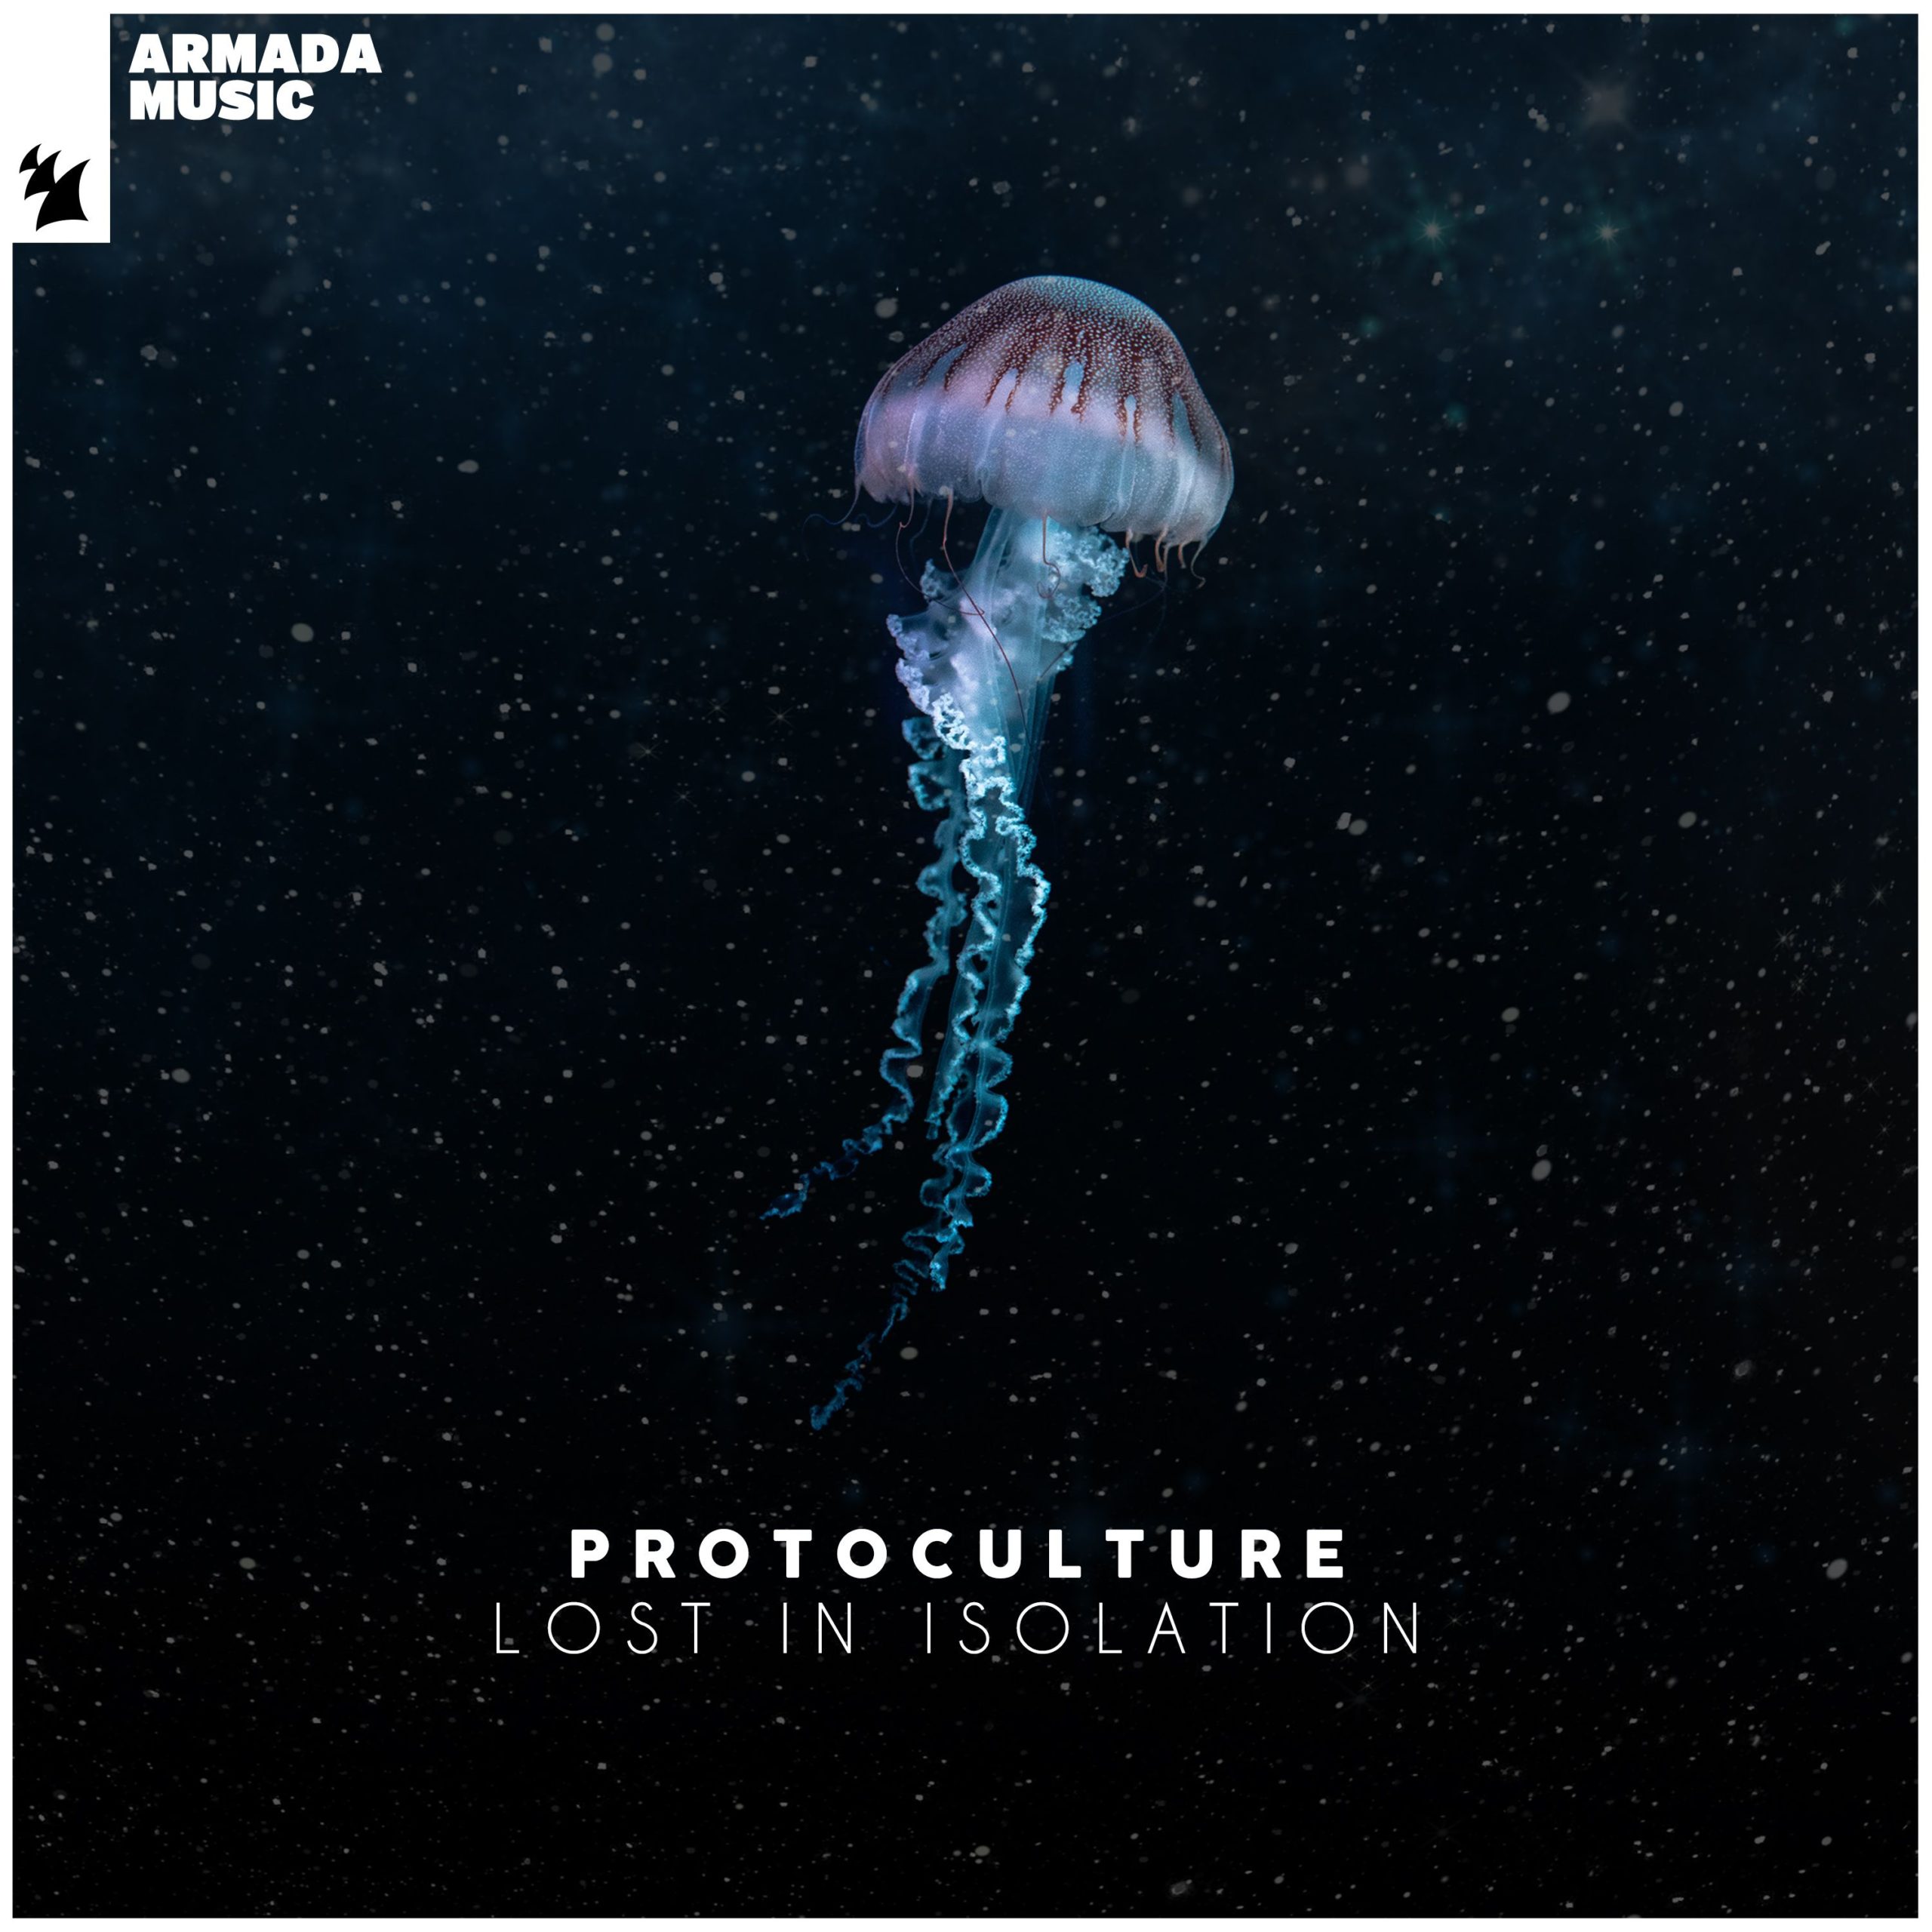 Protoculture presents Lost In Isolation (album) on Armada Music